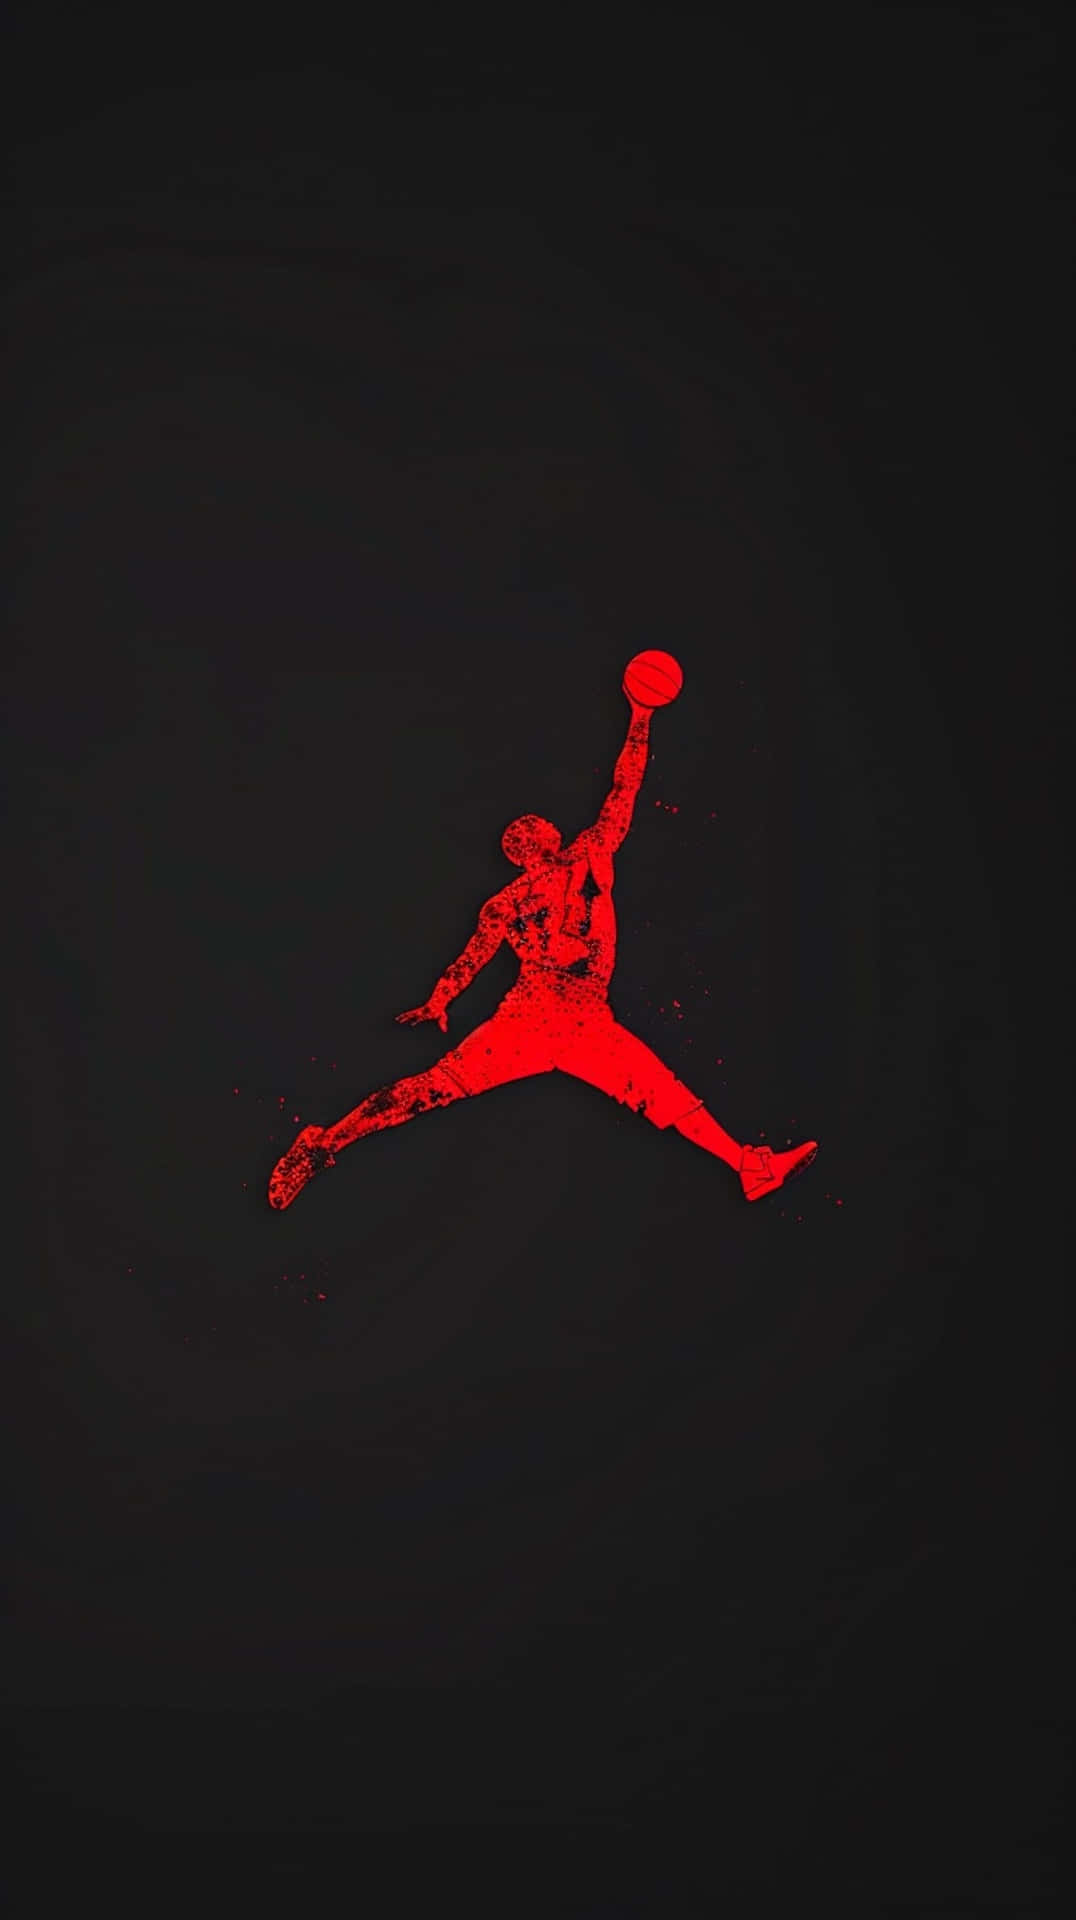 Red Jumpman Silhouetteon Black Background Wallpaper